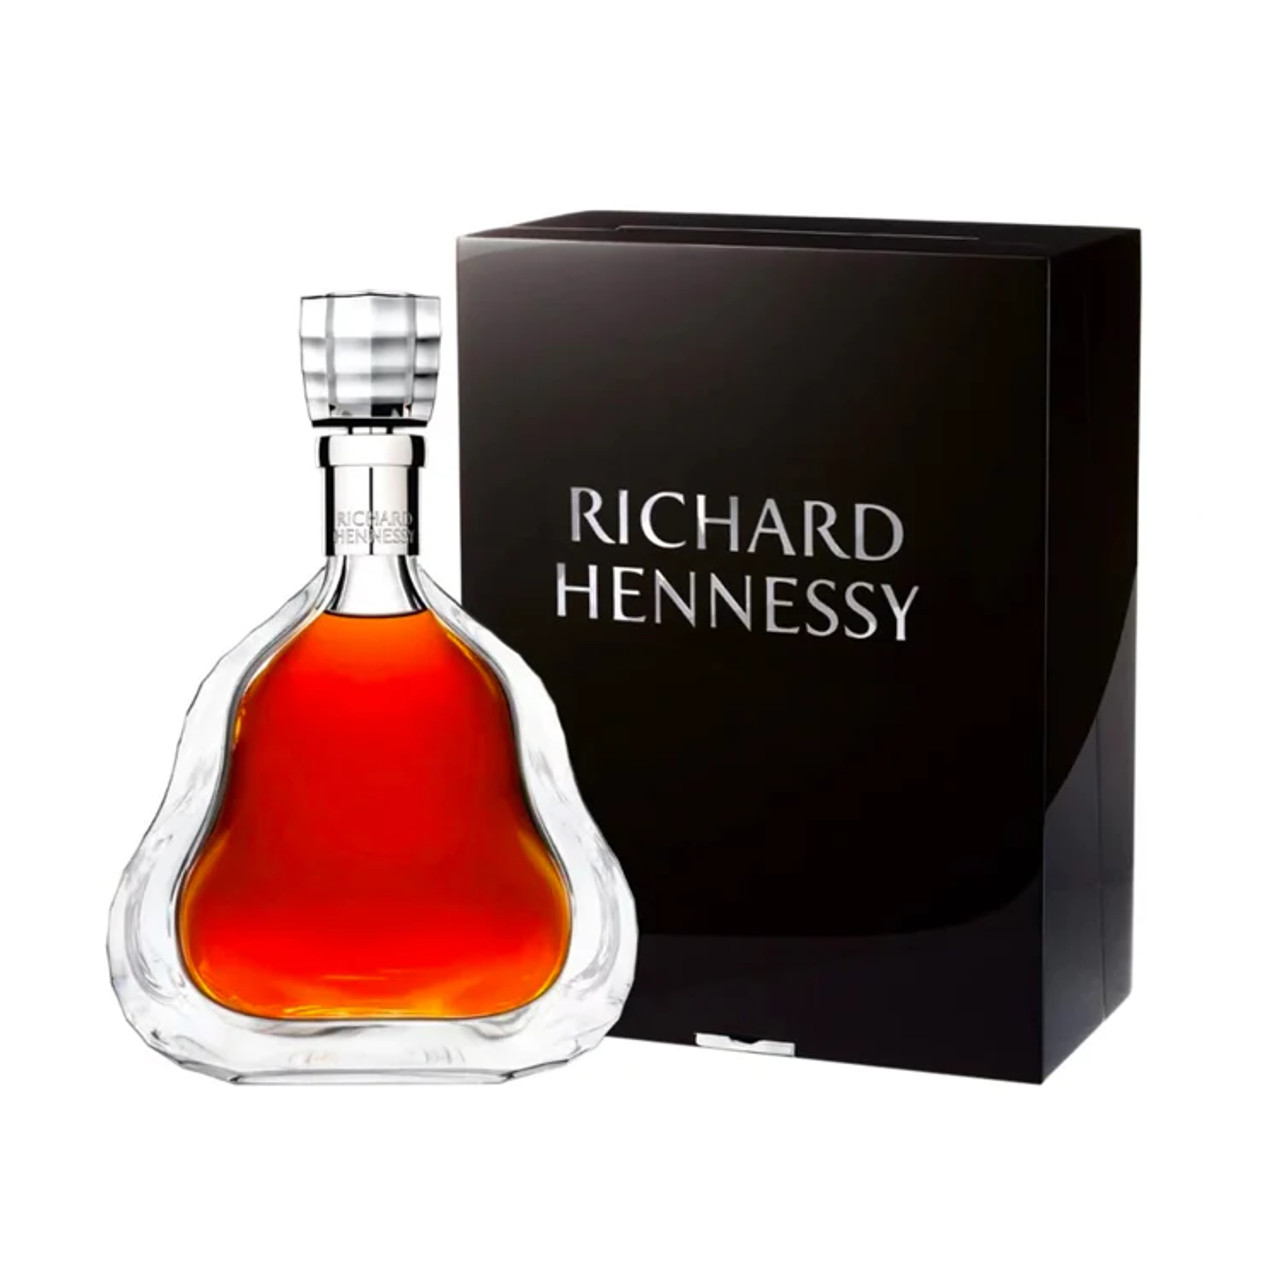 Hennessy James Cognac (1 Liter)